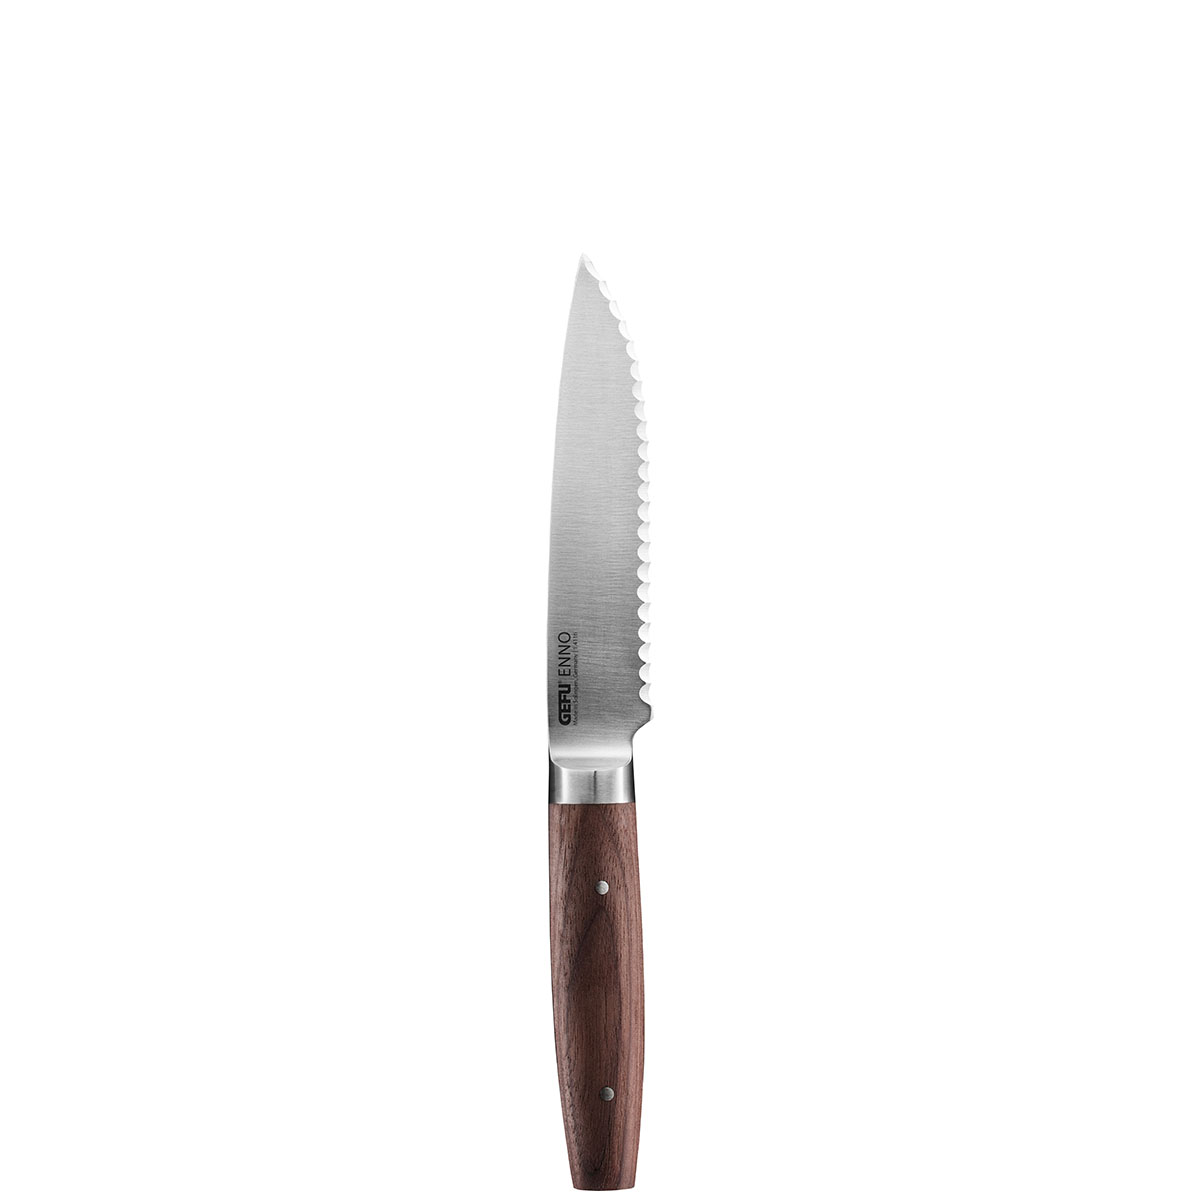 Universal knife ENNO, 11.5 cm serrated blade